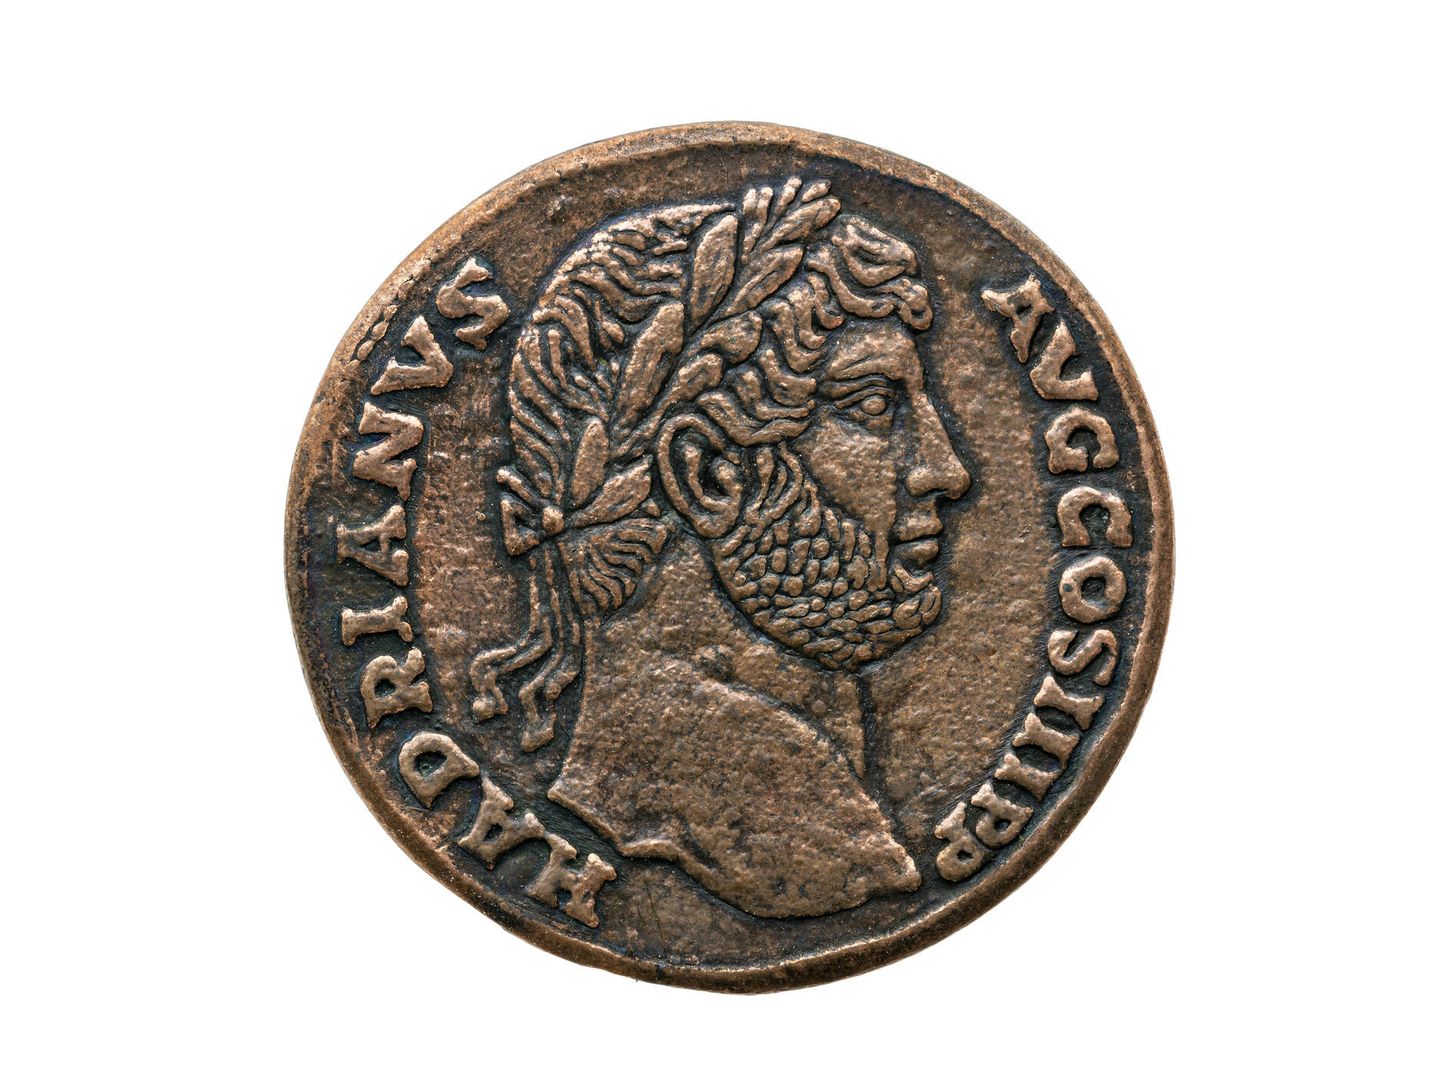 Moneda romana del emperador romano Adriano (Fuente: iStock)